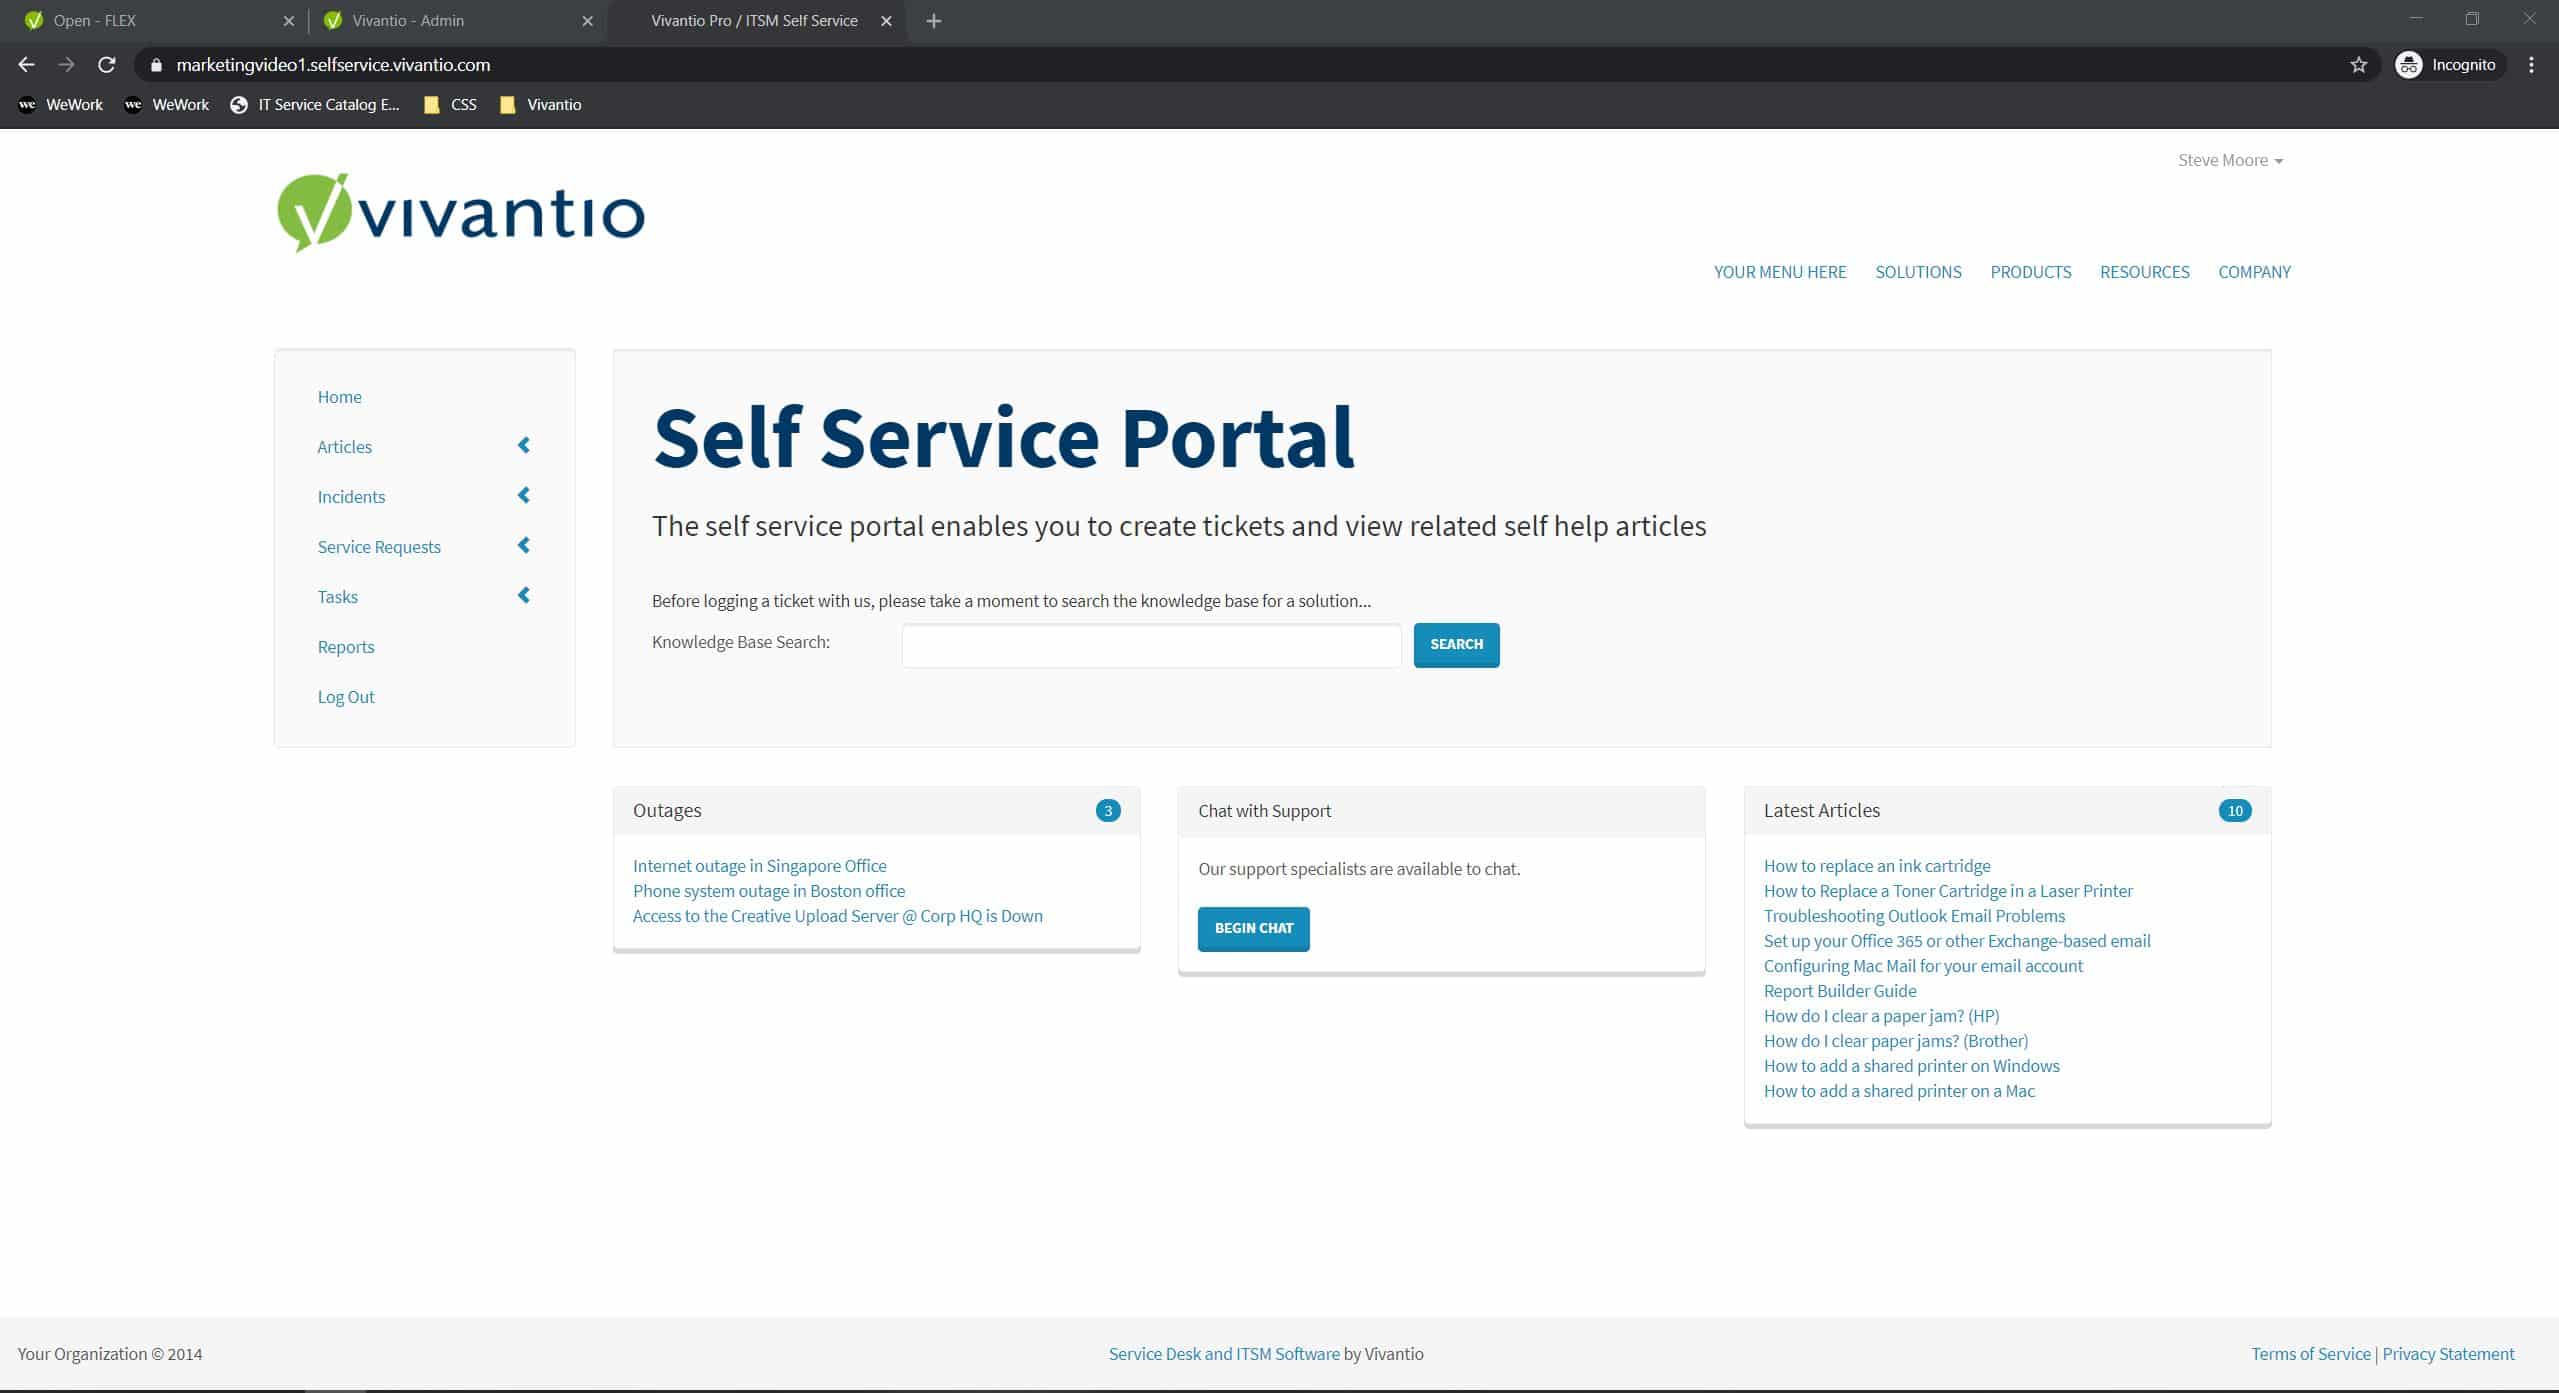 self service portal home page screen capture